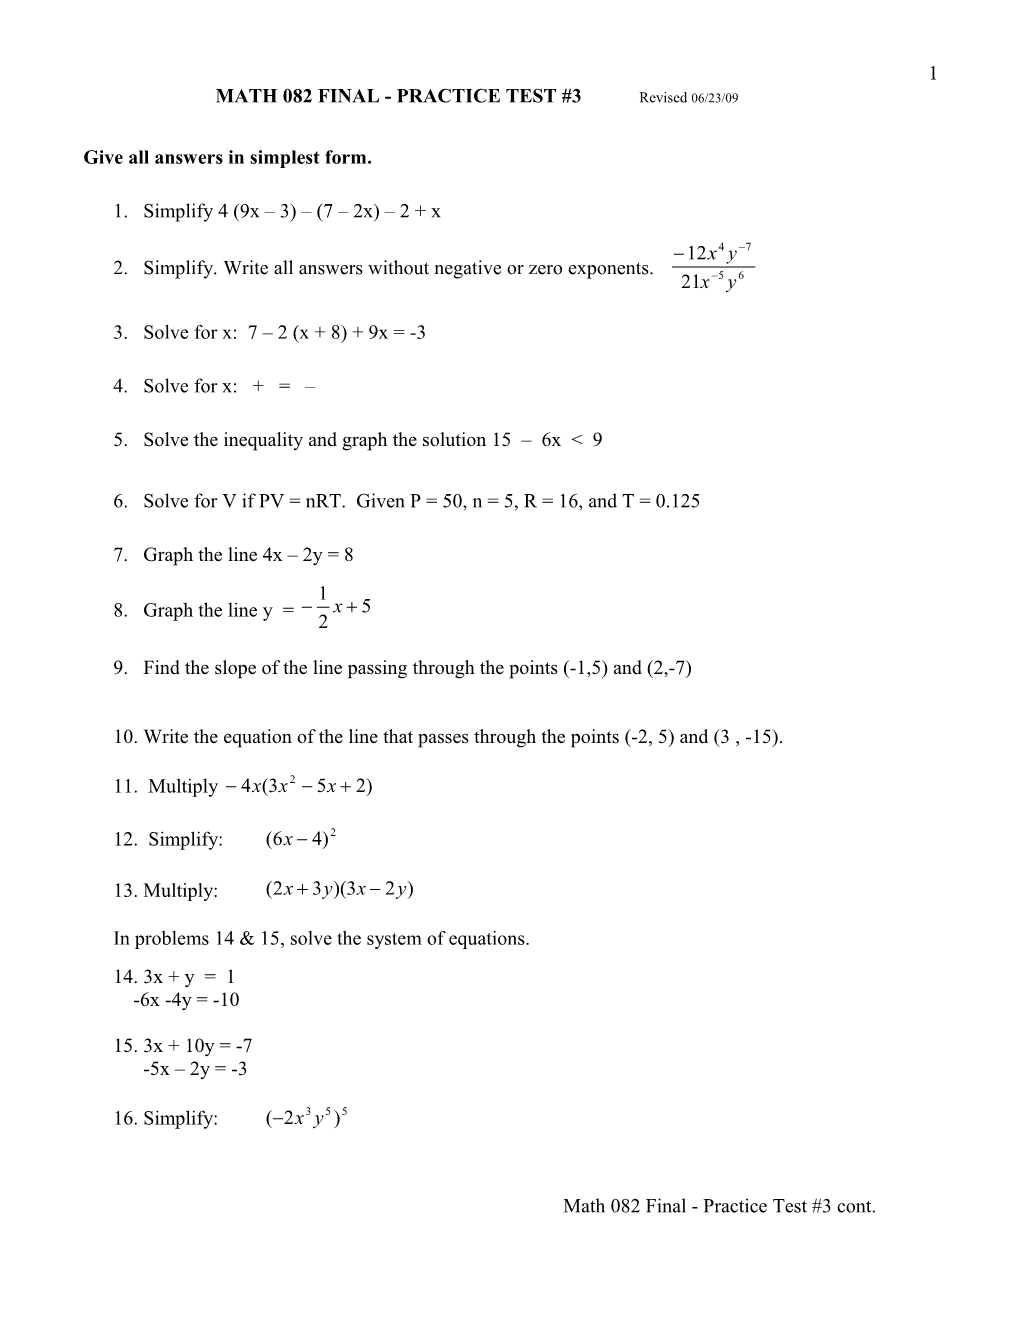 Math 082 Final - Practice Test #1 3/07